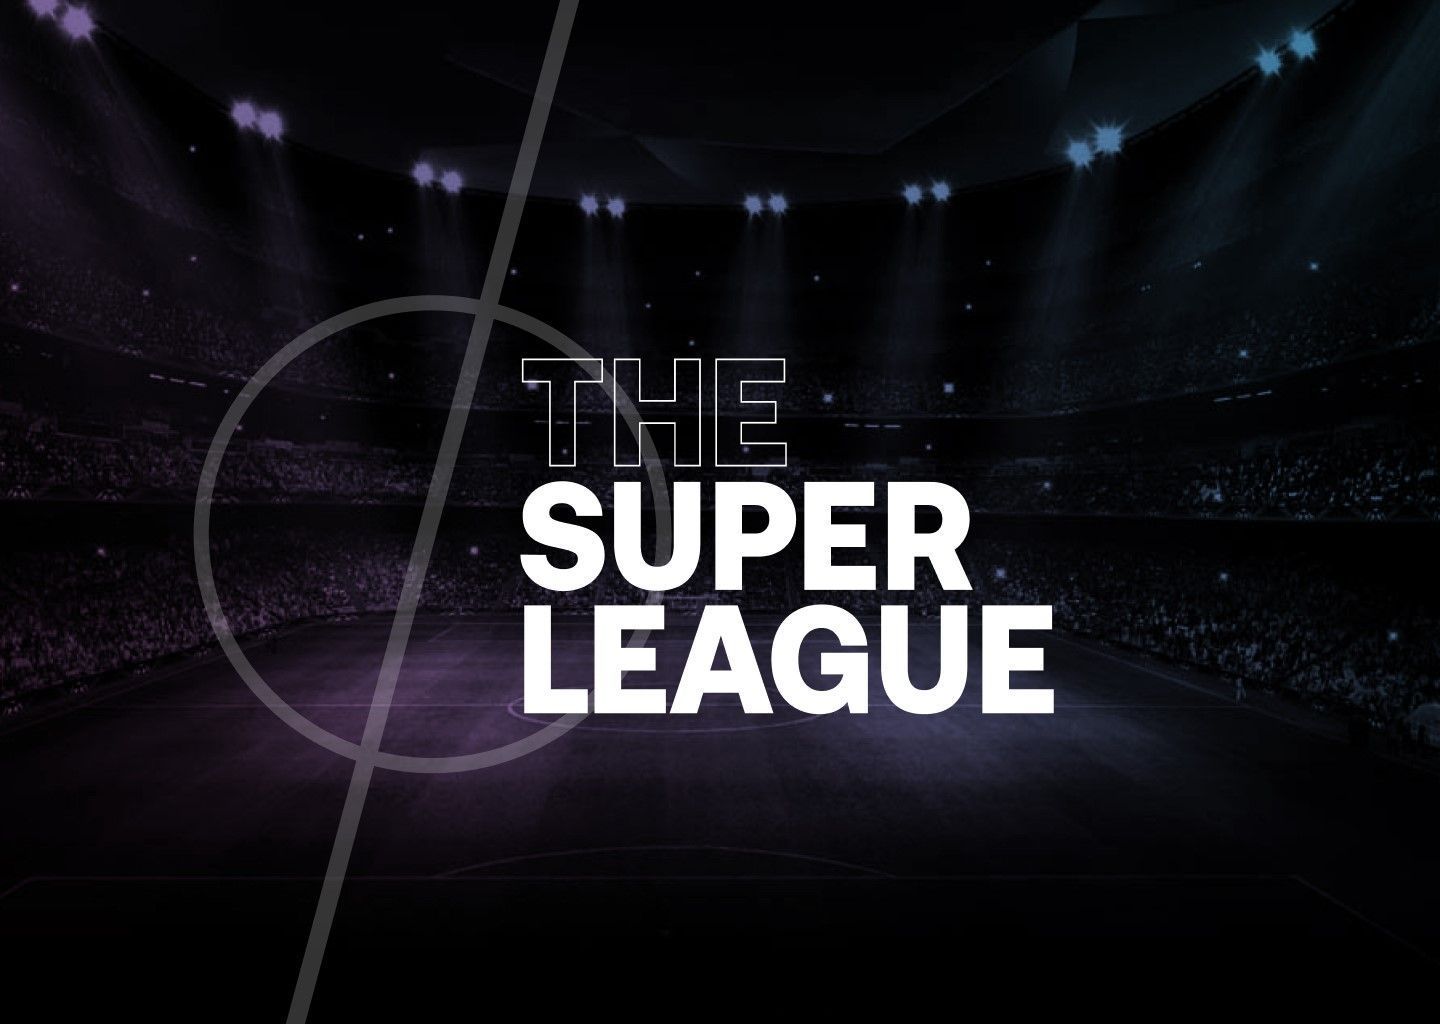 LaLiga statement on The Super League